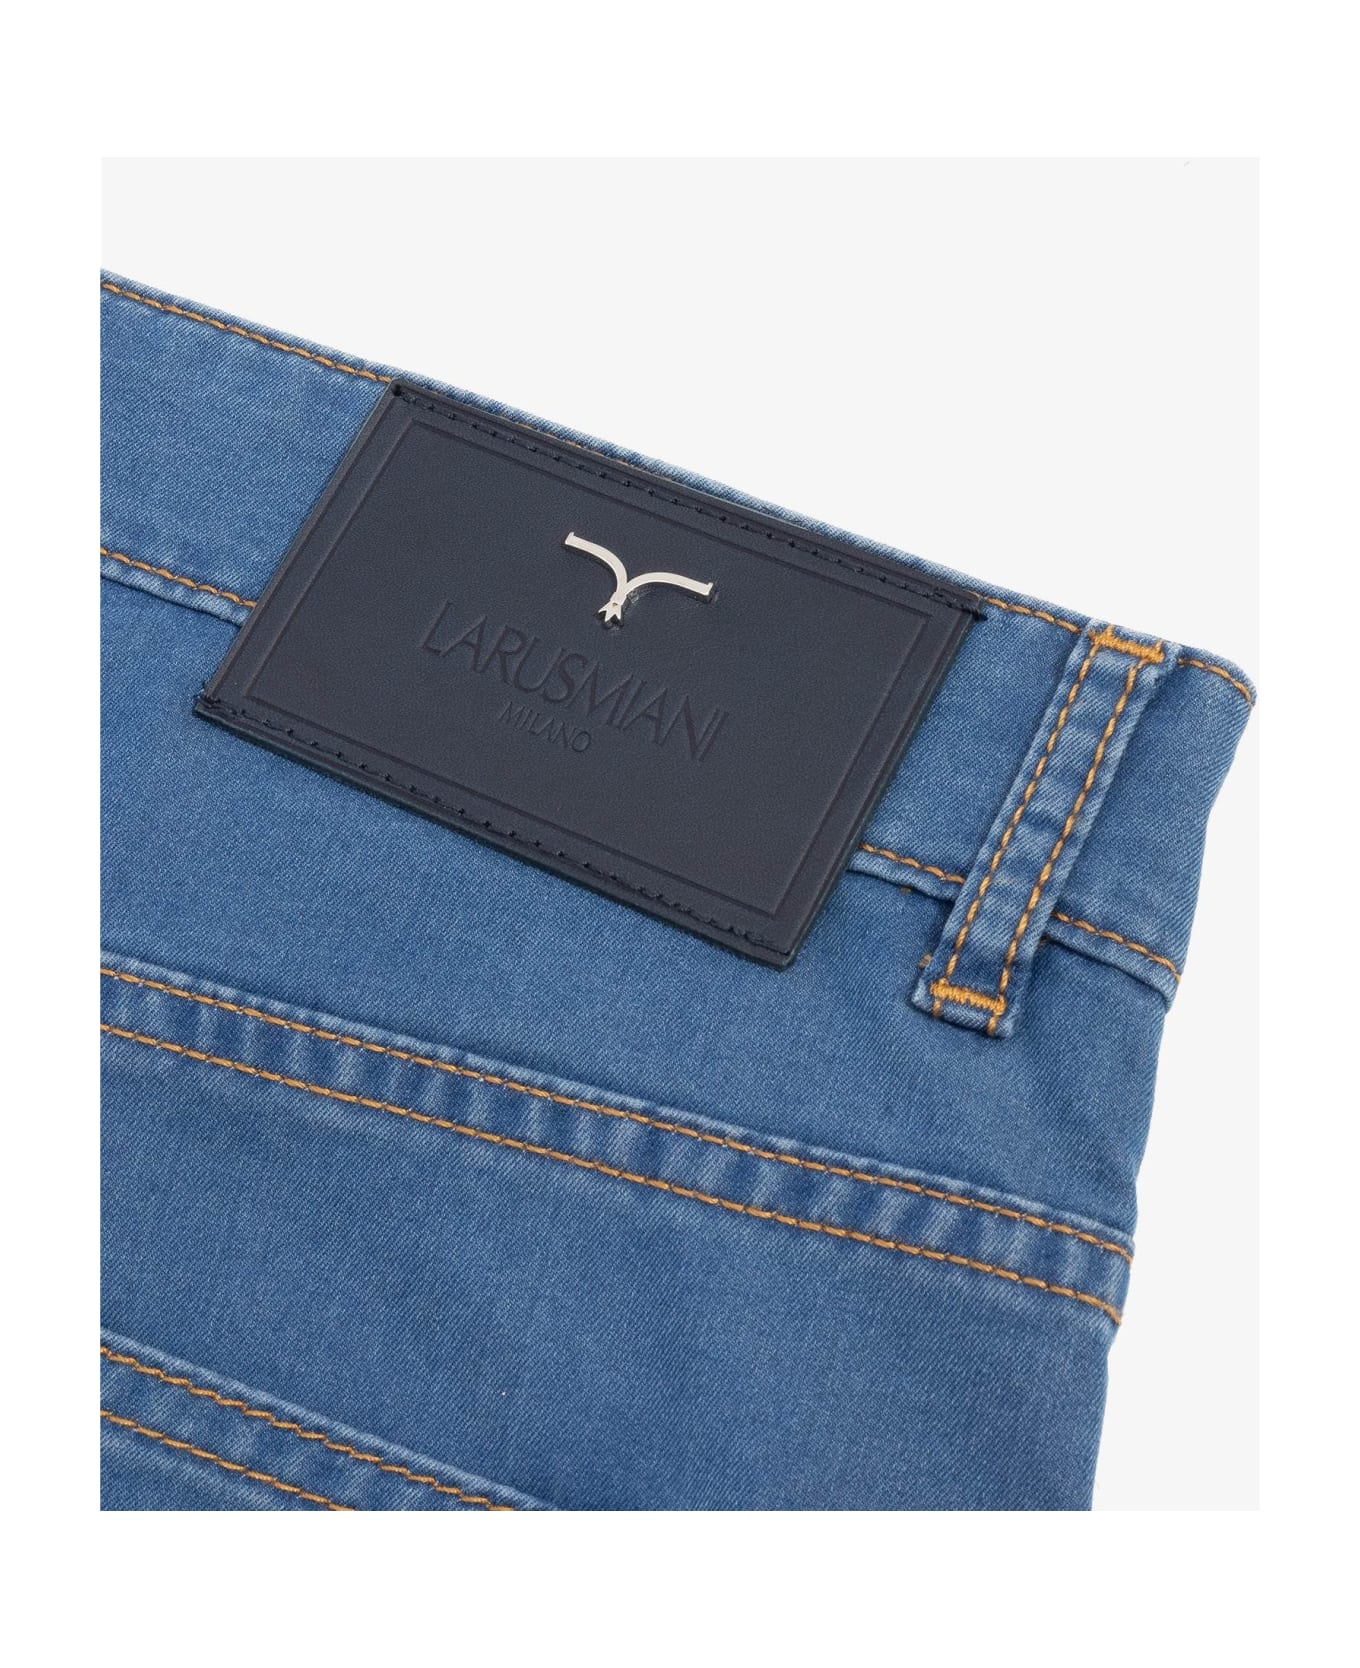 Larusmiani Trousers Jeans Five Pockets Jeans - LightBlue デニム